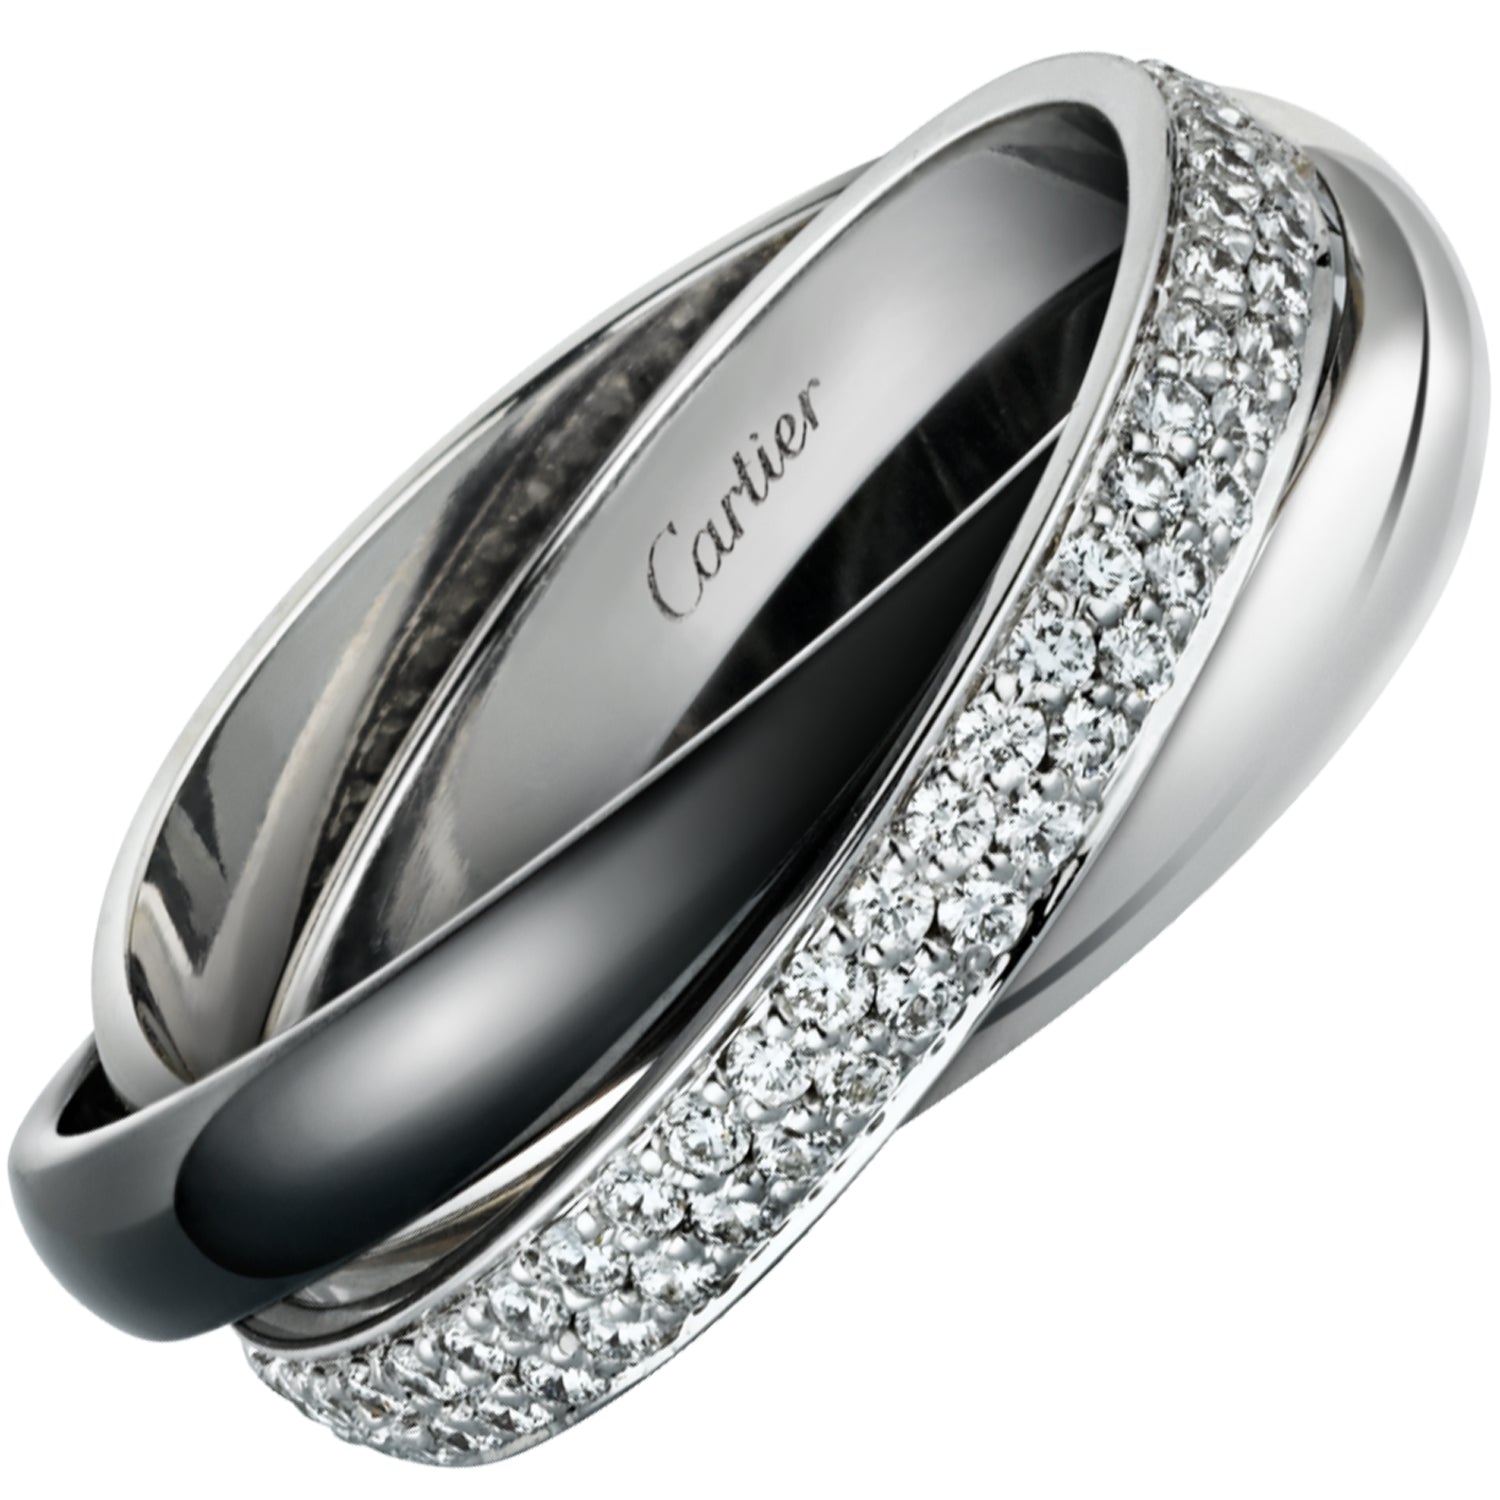 Cartier Diamond and blue sapphire trinity ring | Fashion rings, Trinity ring,  Luxury rings